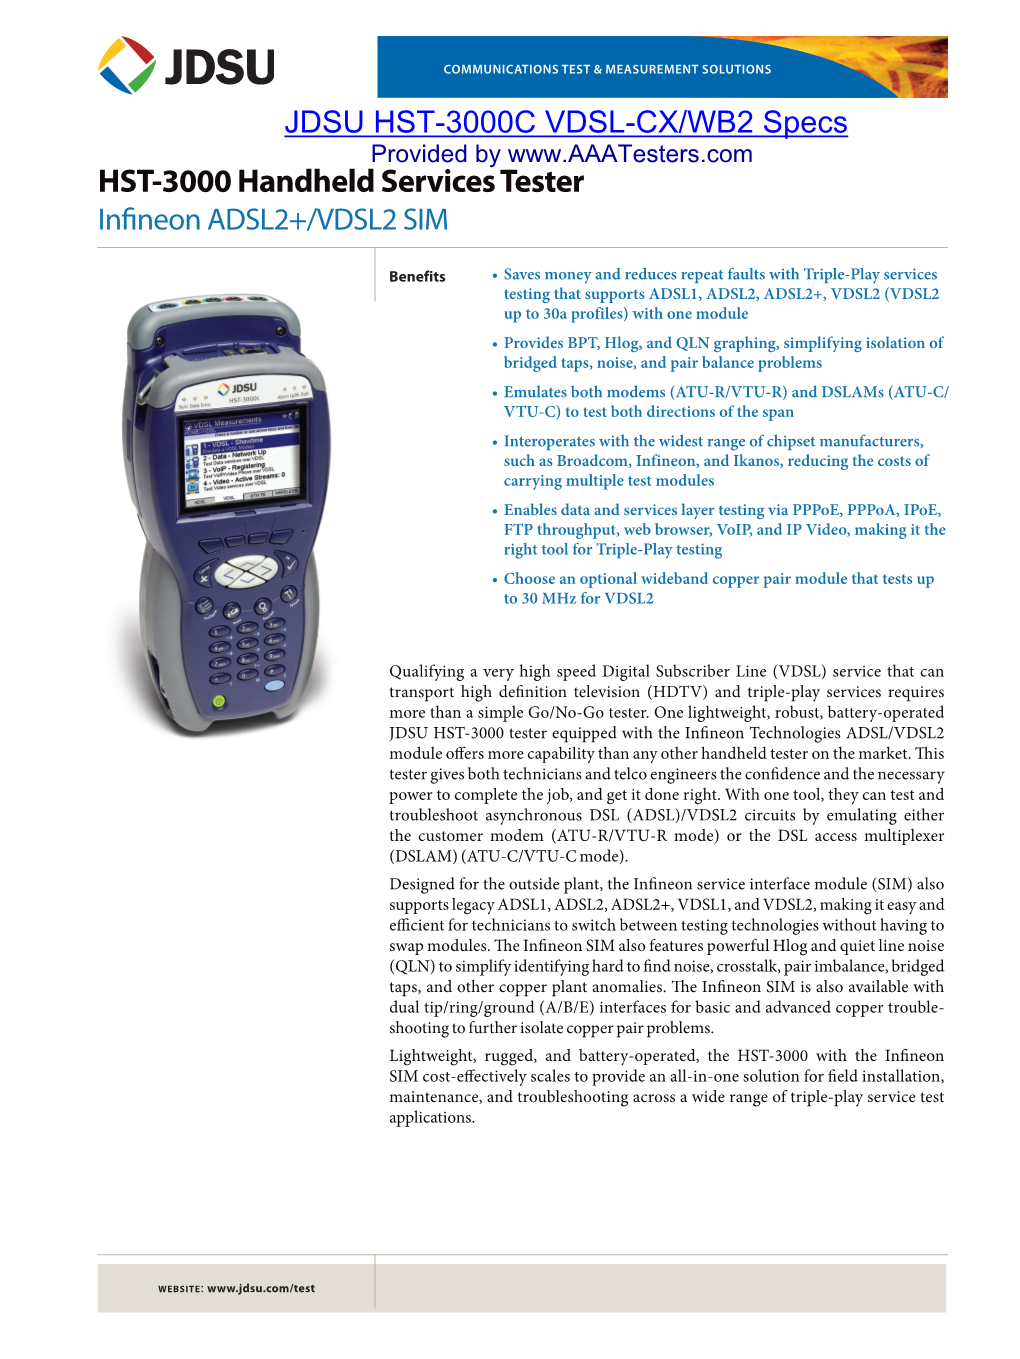 JDSU HST-3000C VDSL-CX/WB2 Specs Provided by HST-3000 Handheld Services Tester Infineon ADSL2+/VDSL2 SIM